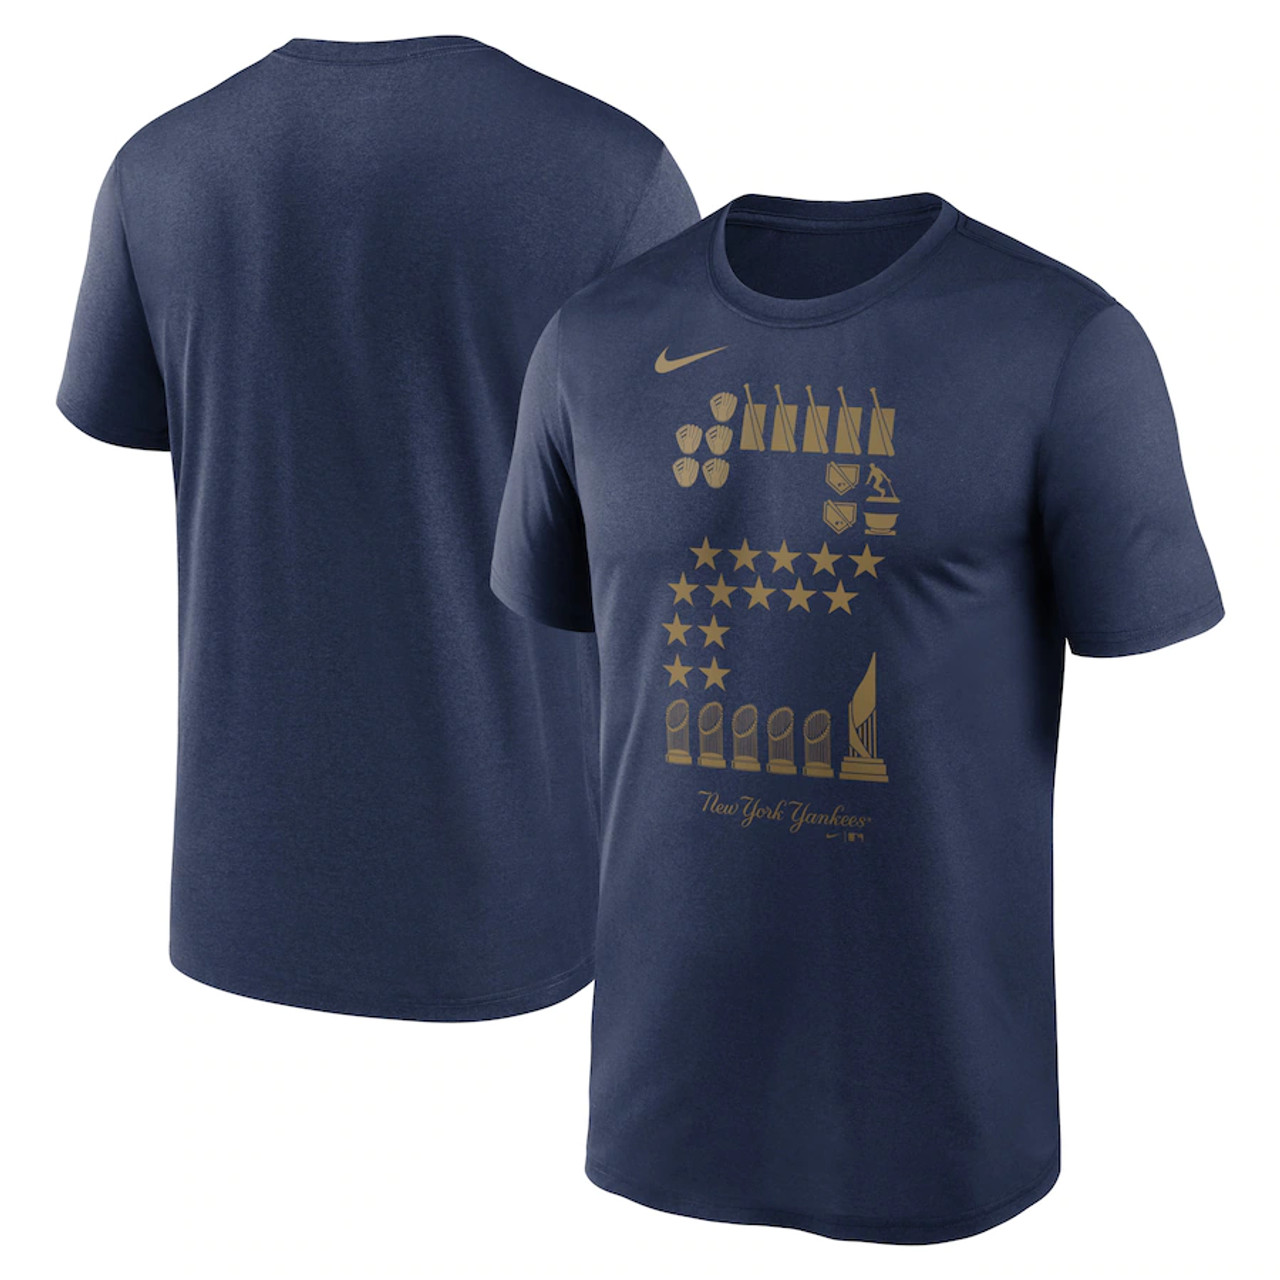 Derek Jeter Career Awards Dri-Fit T-Shirt - Navy NY Yankees Adult